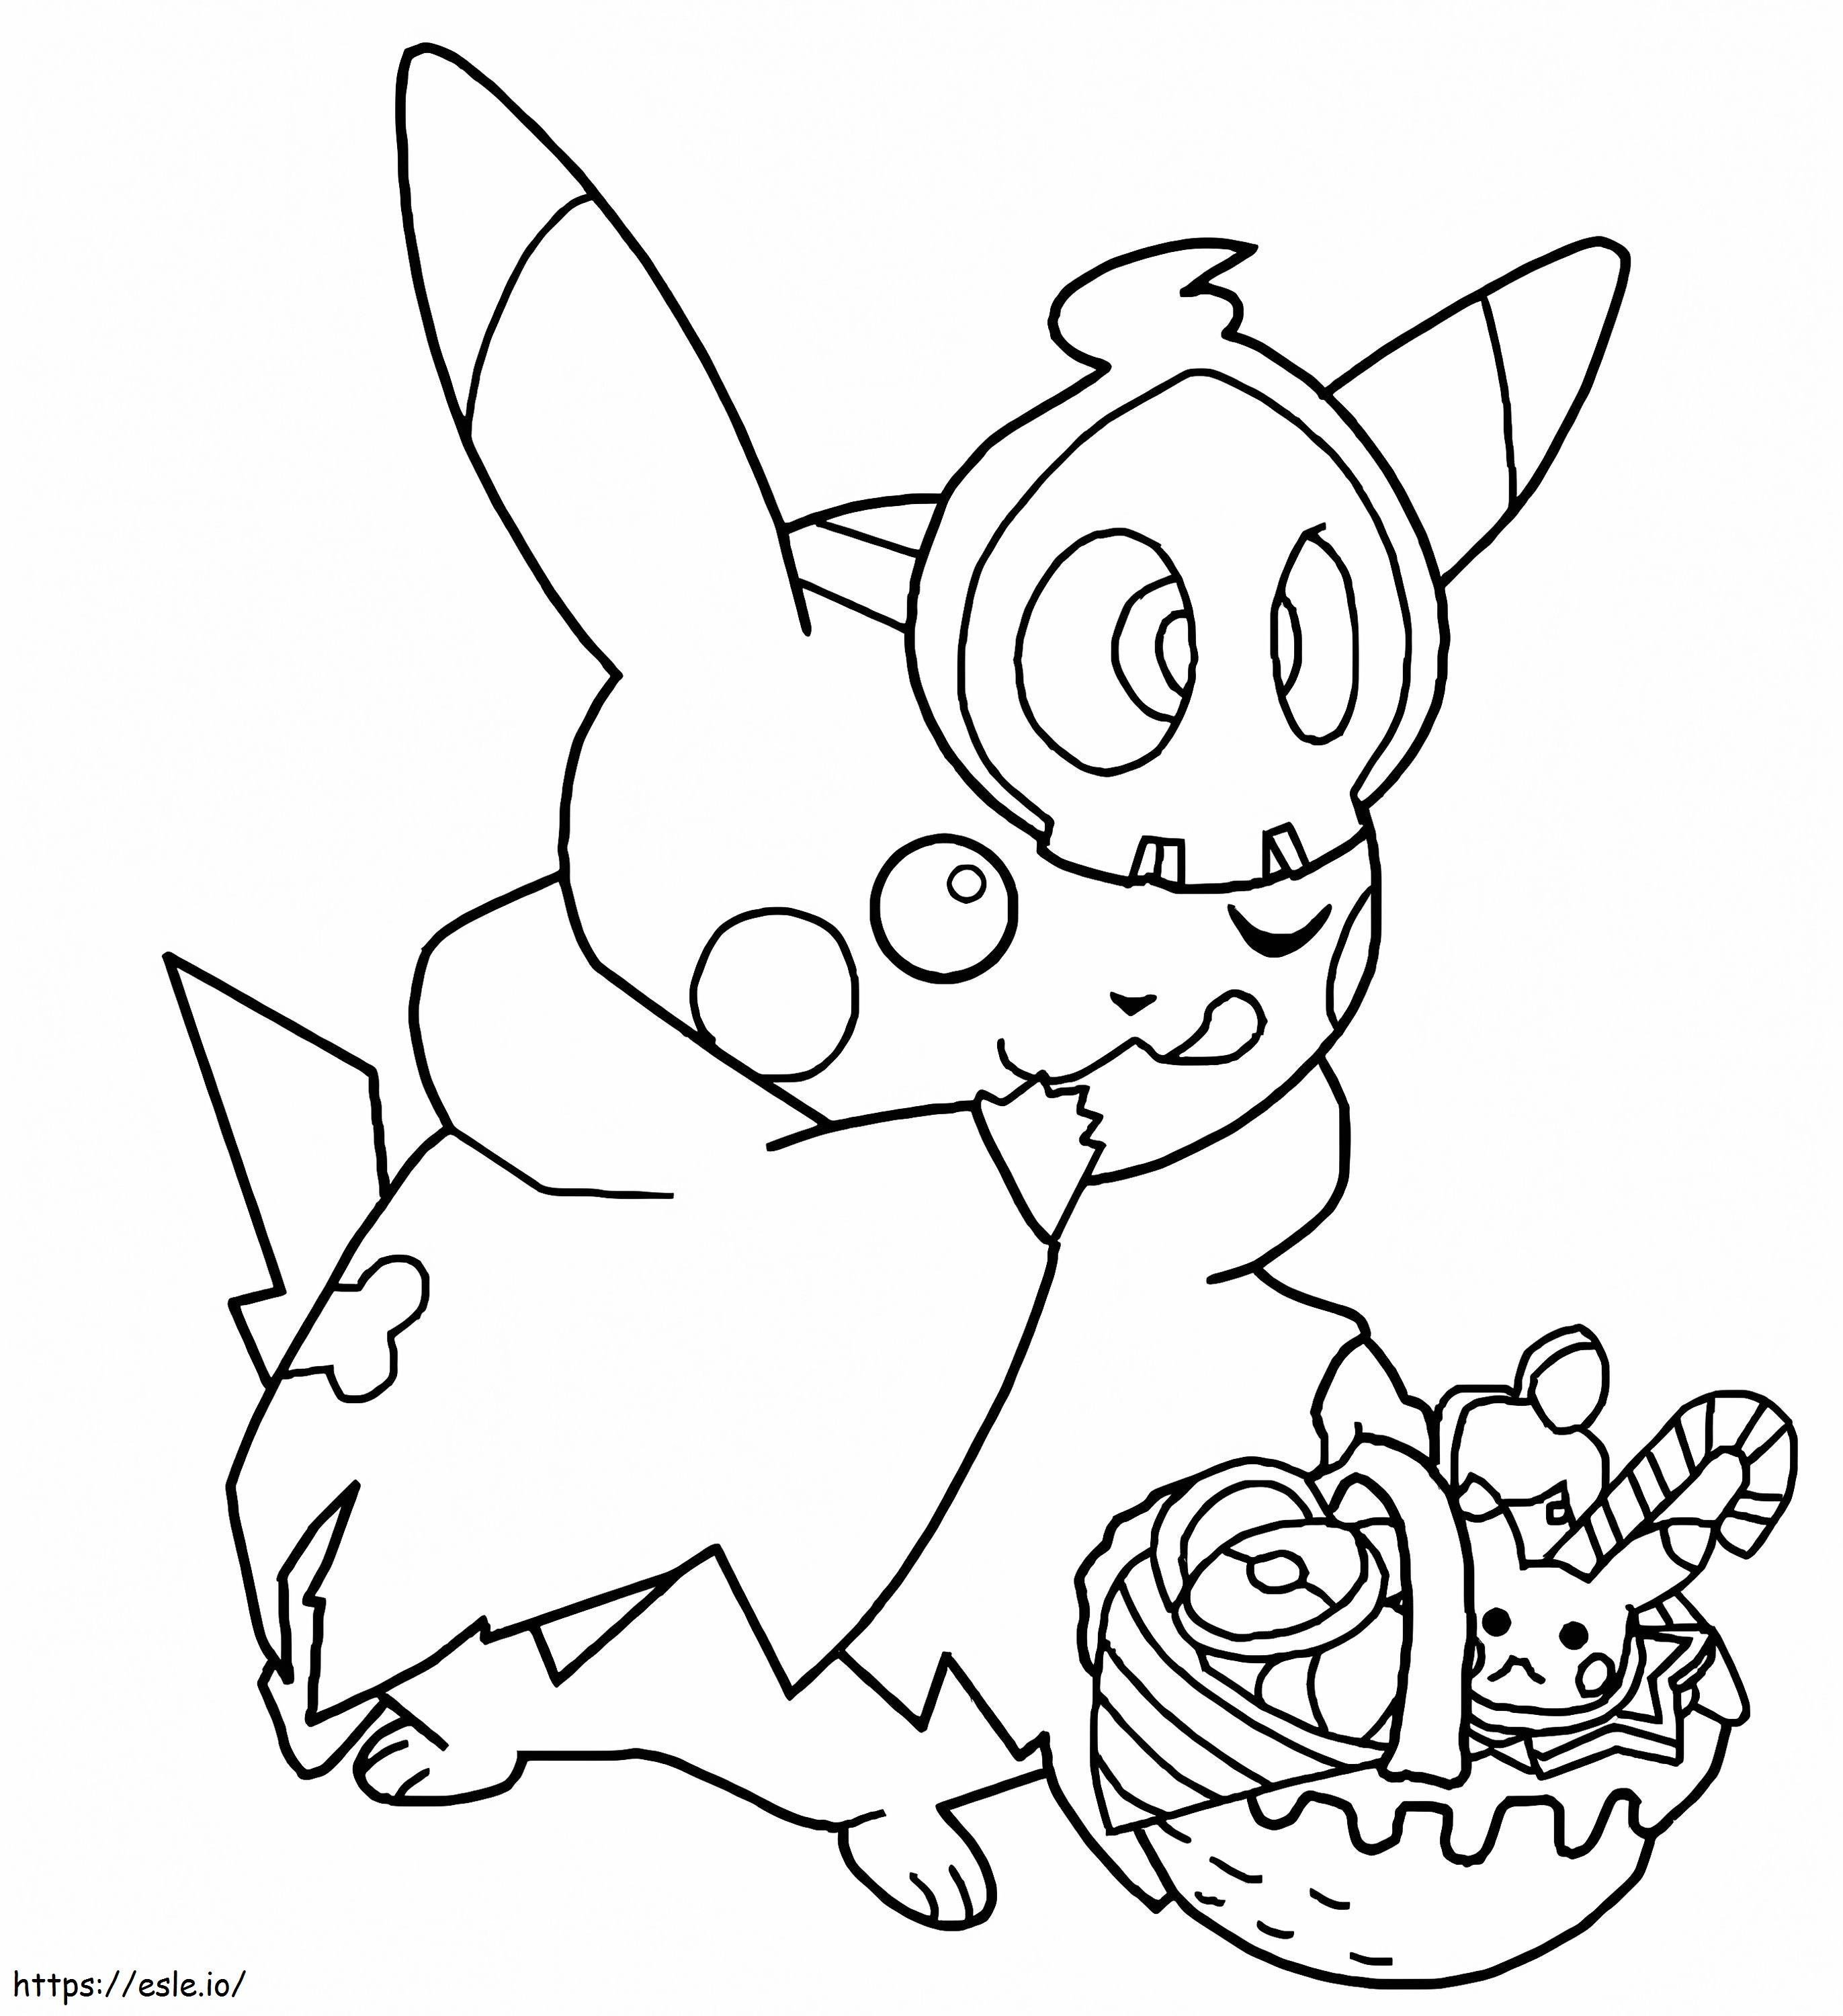 Free Printable Halloween Pikachu coloring page